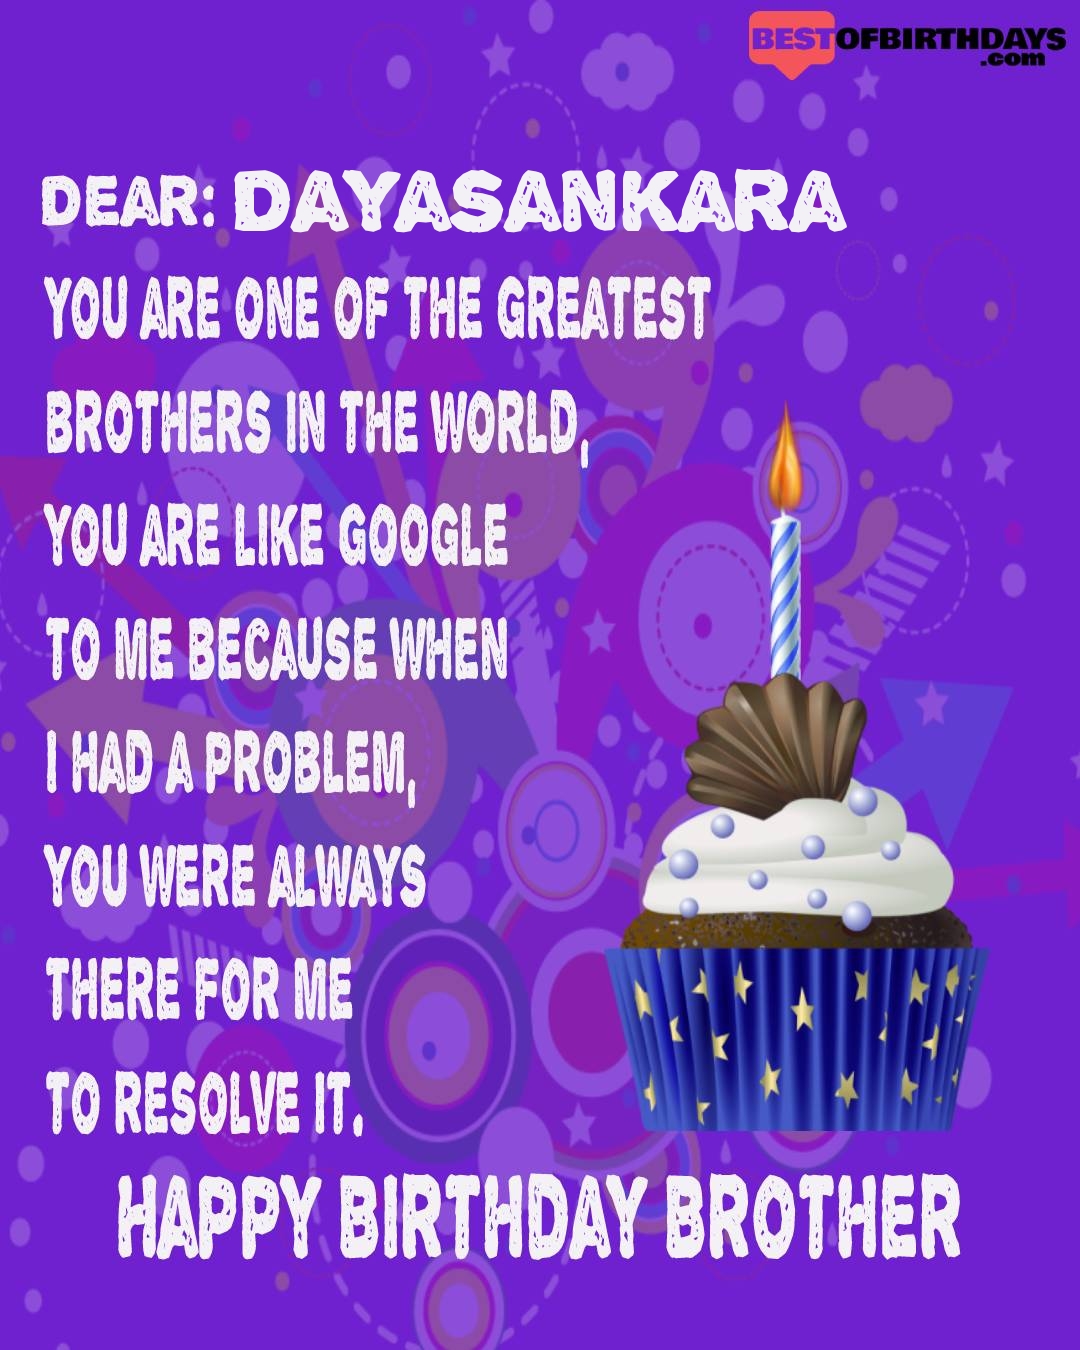 Happy birthday dayasankara bhai brother bro